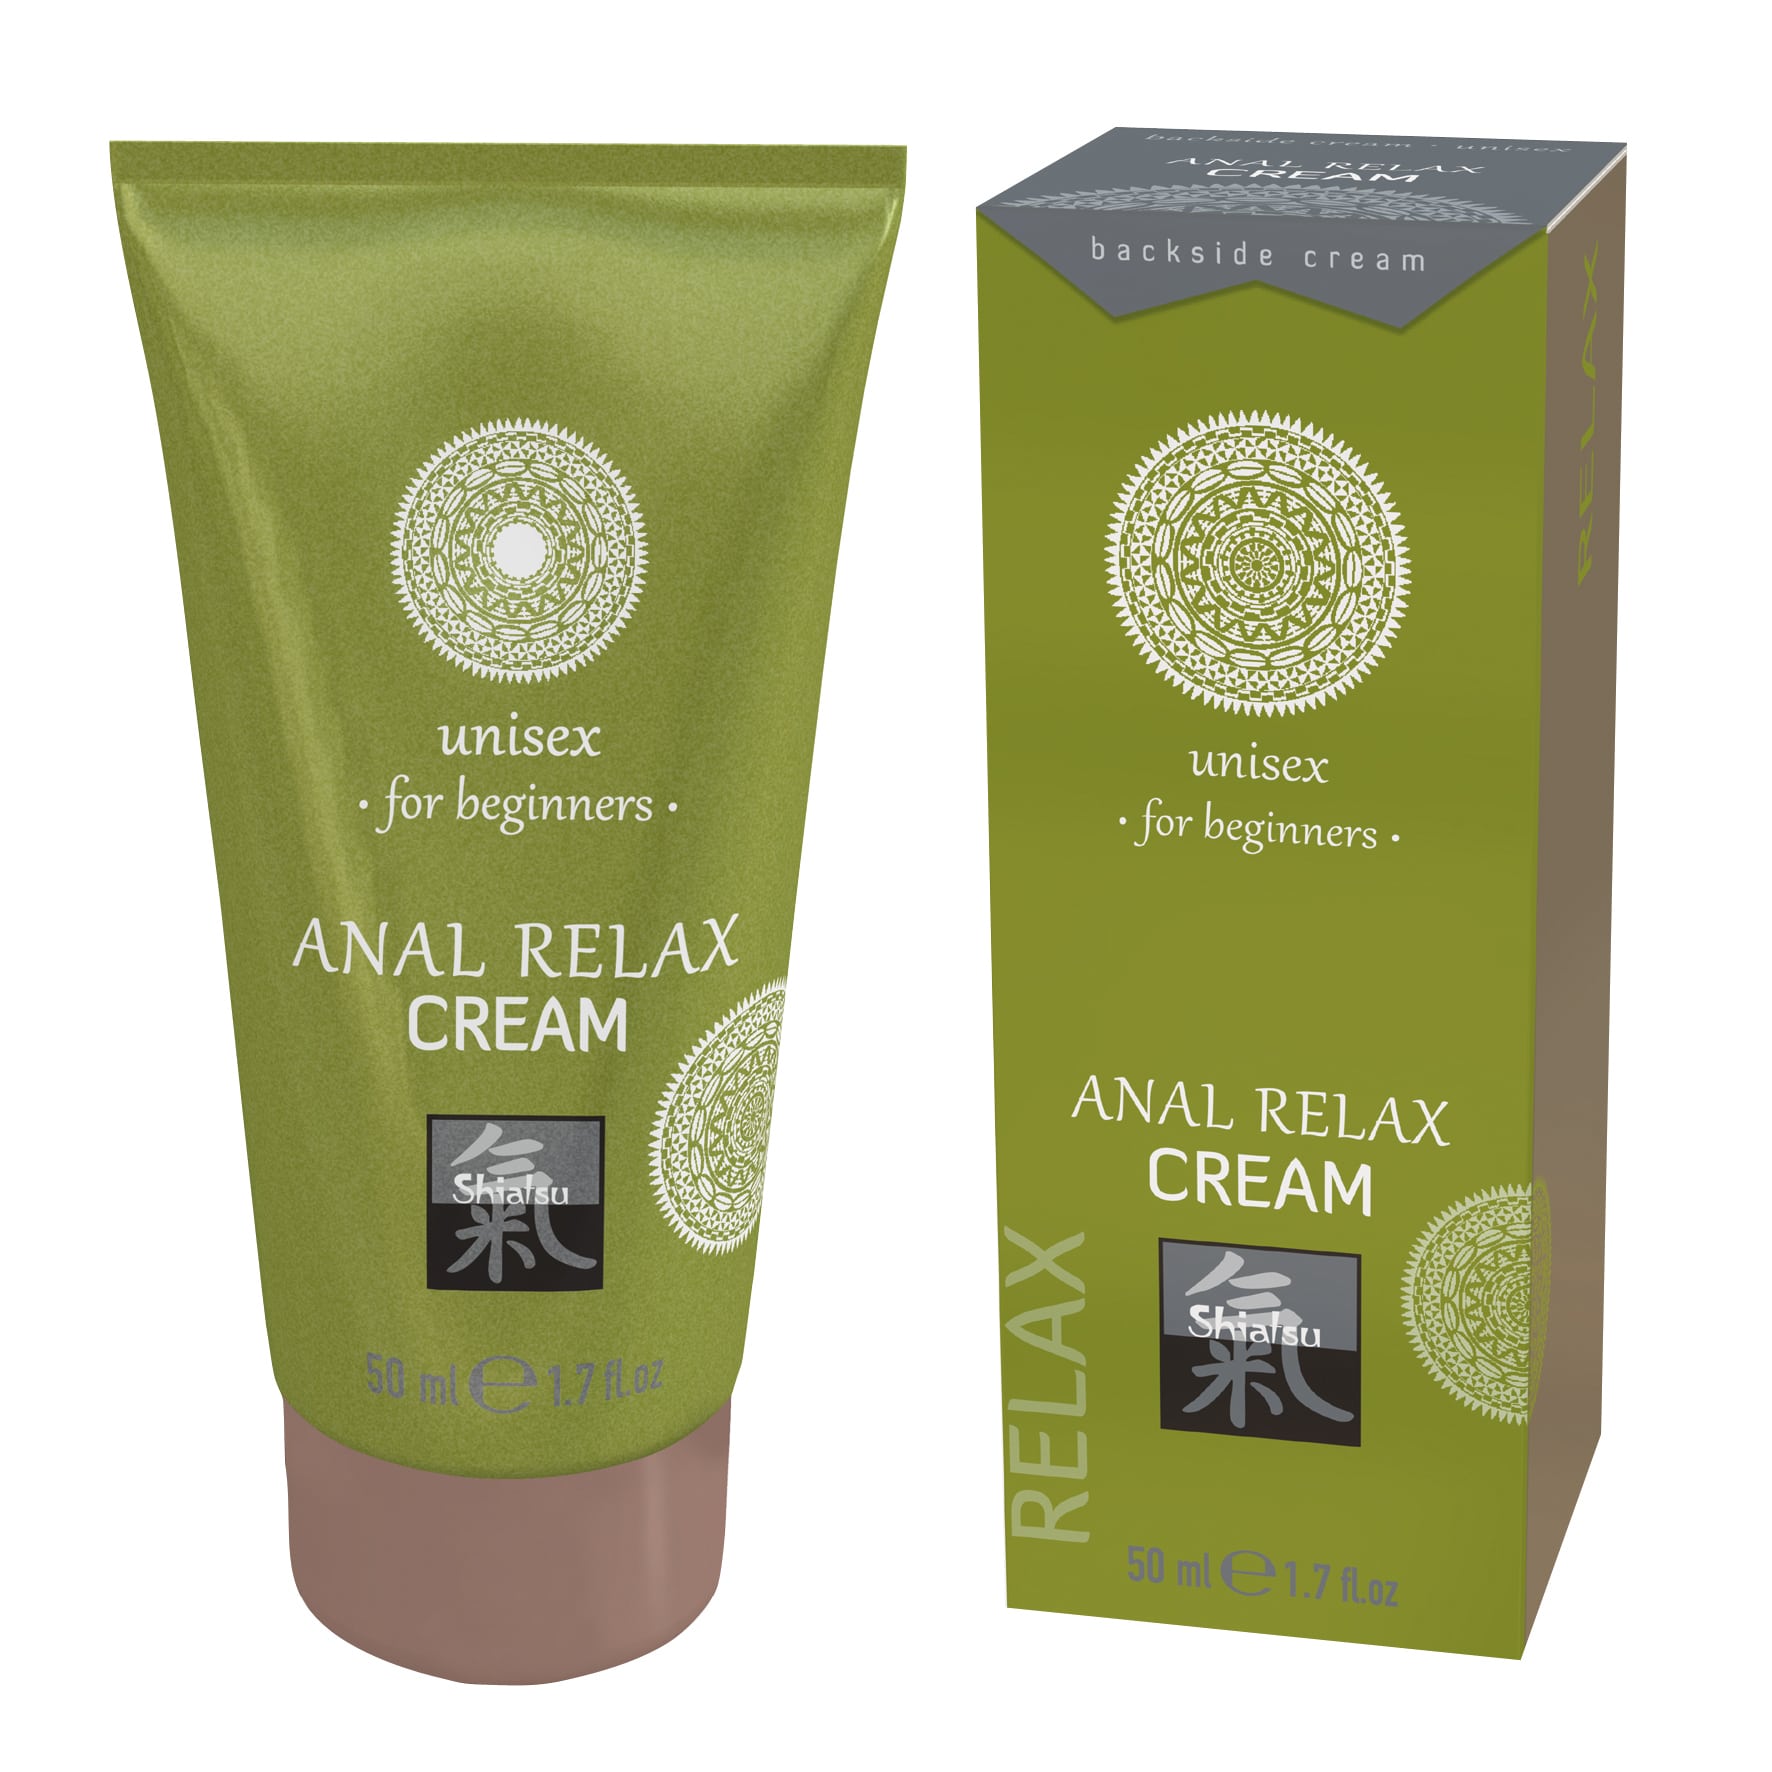 Anal-Relax-Cream-Beginners-Shiatsu-50-ml-91281